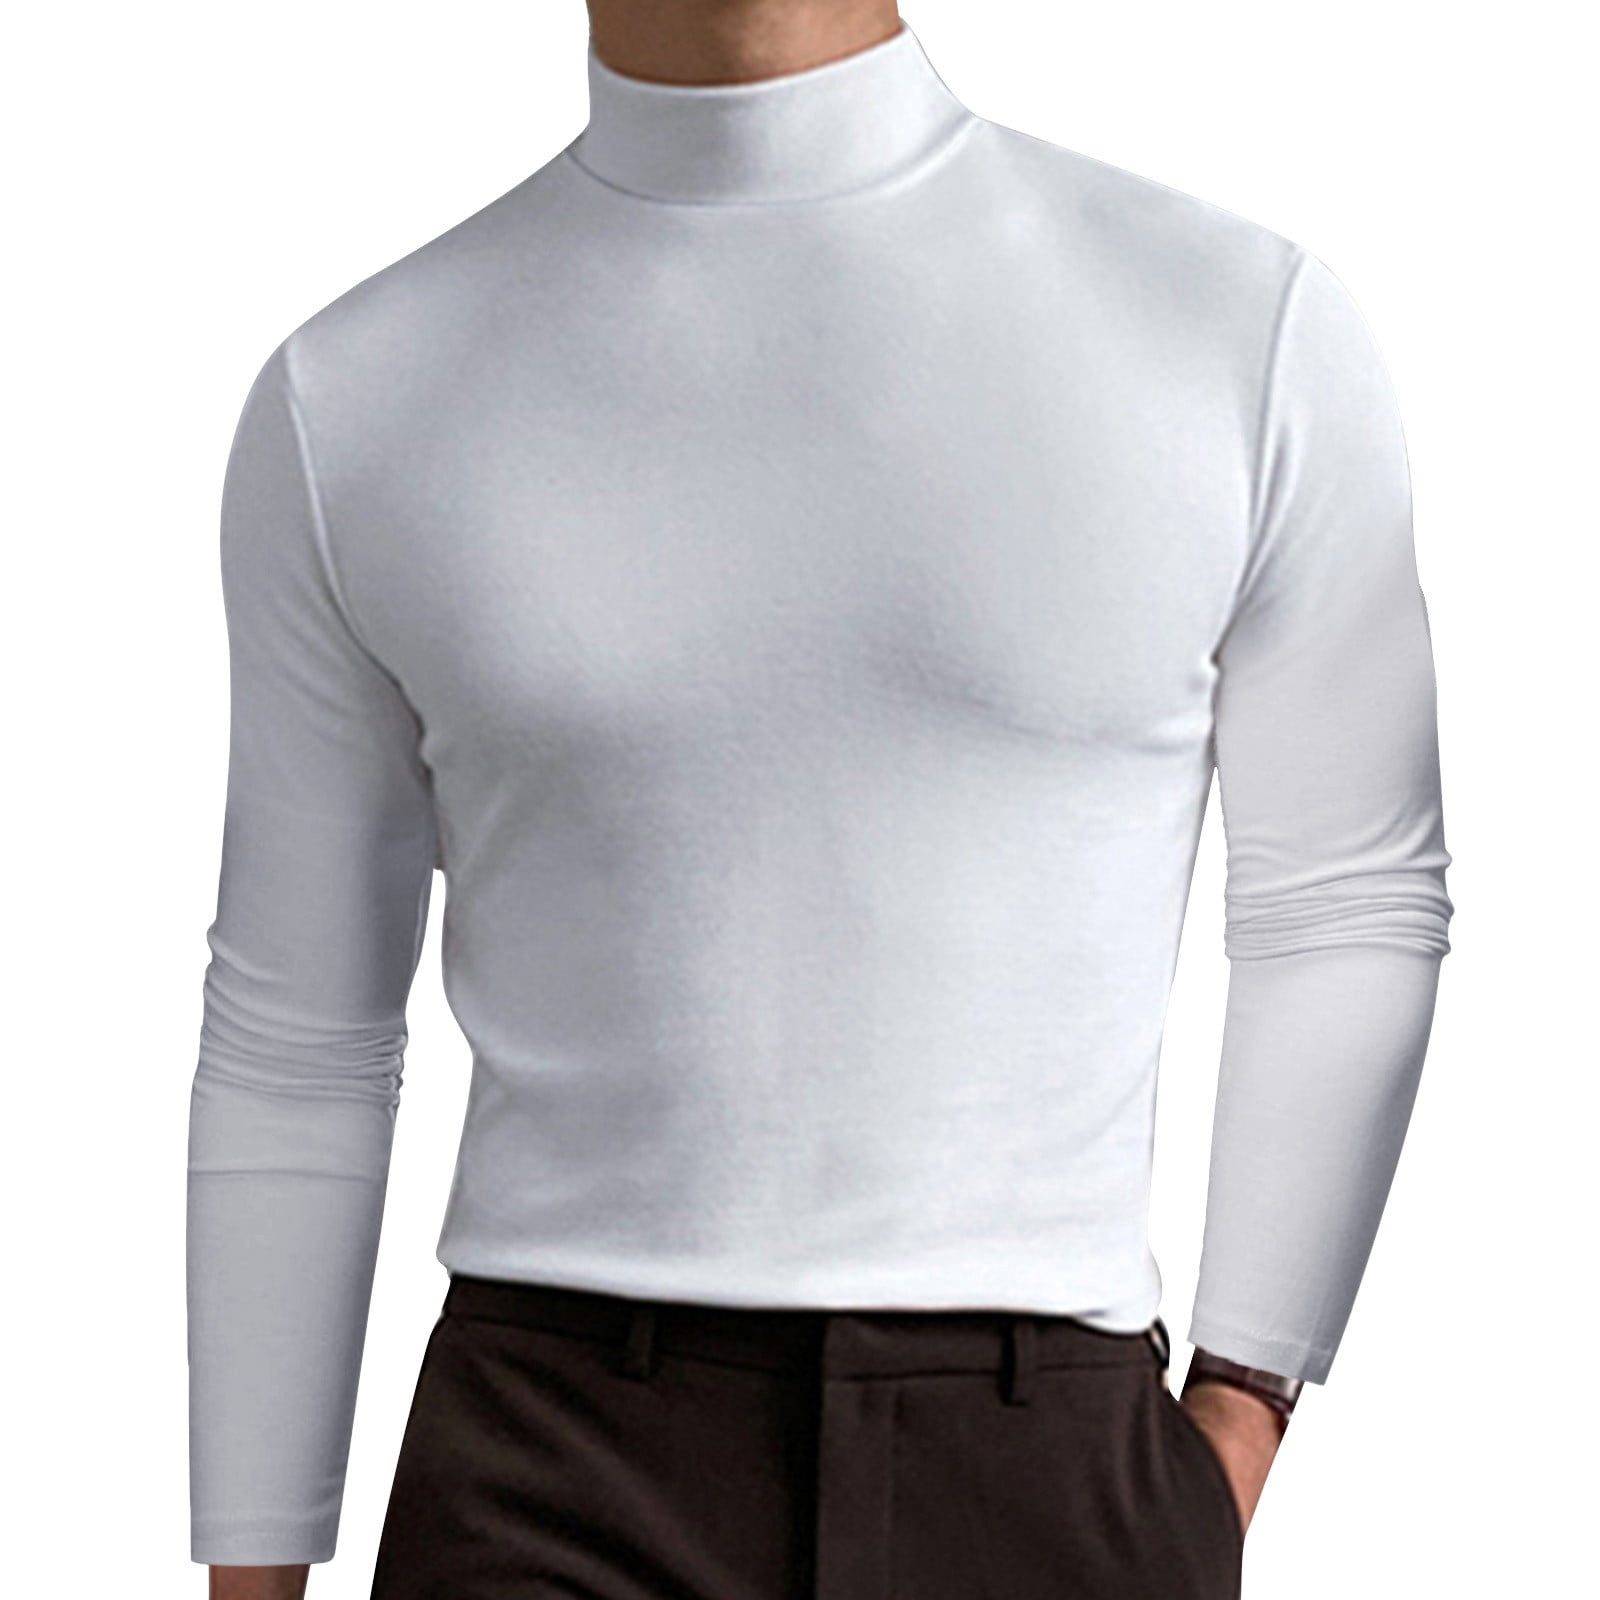 YTD Mens Casual Slim Fit Basic Henley Long Sleeve Fashion T-Shirt